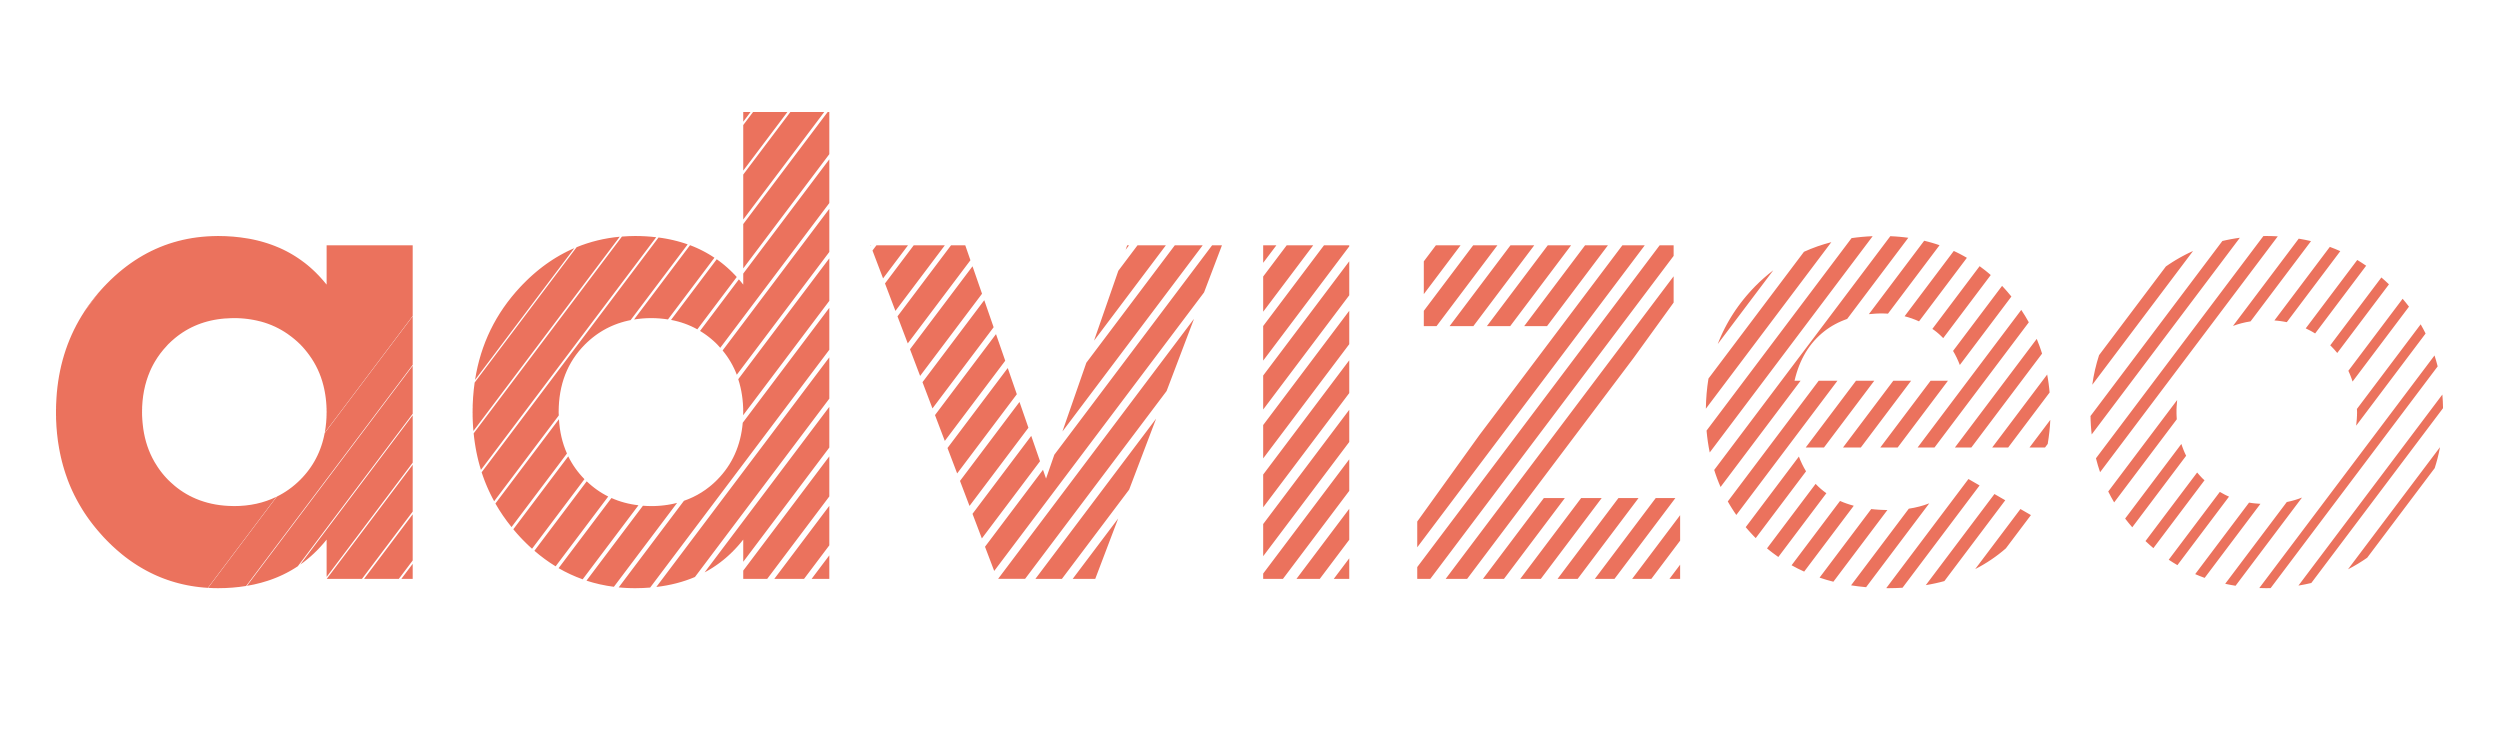 Advizeo-branding-rvb-corail.png